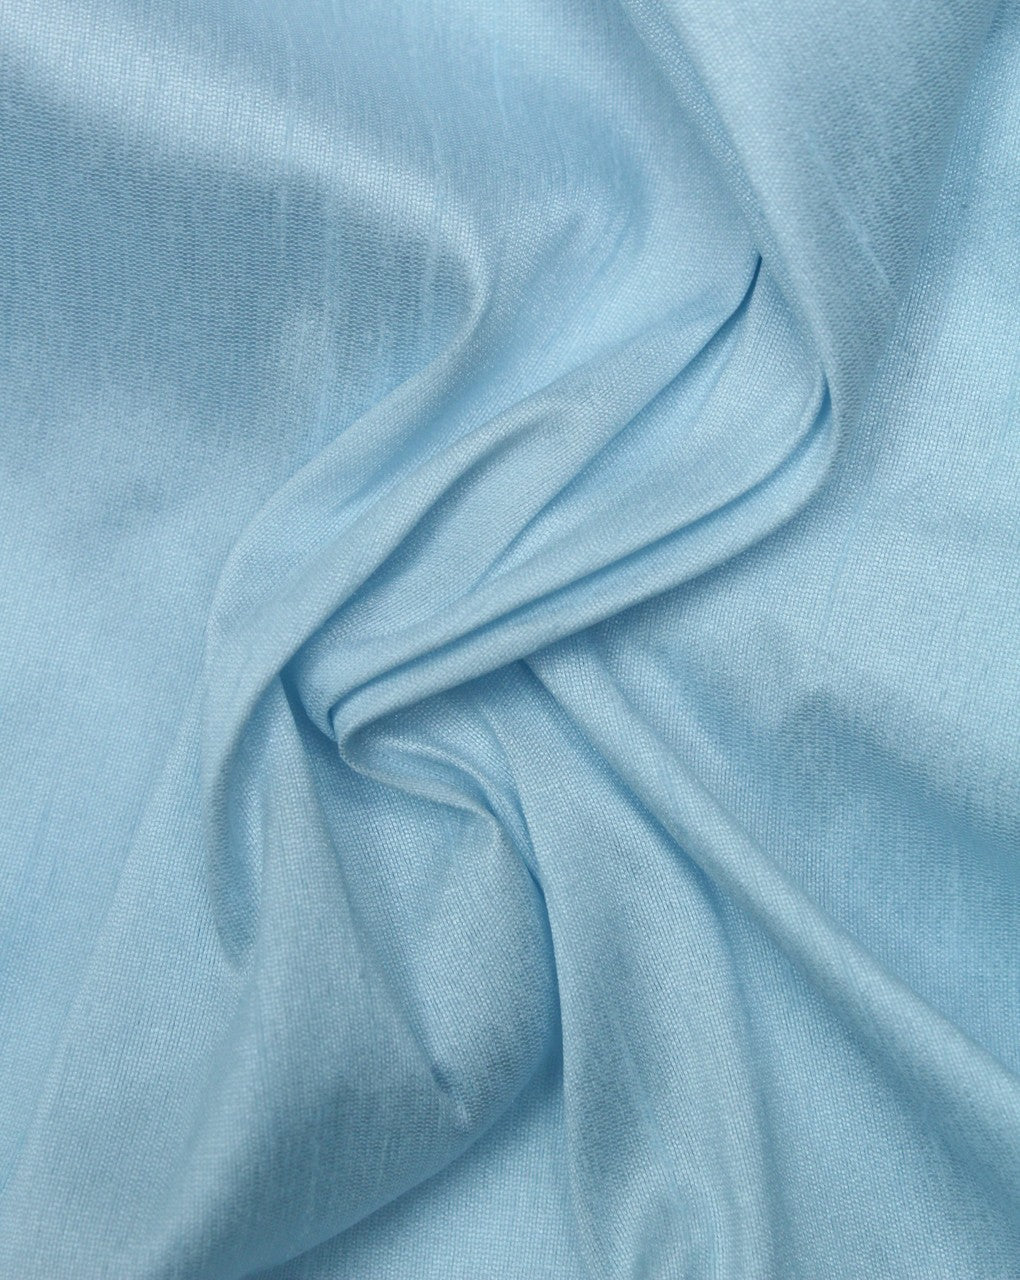 Plain Light Blue Poly Dupion Fabric